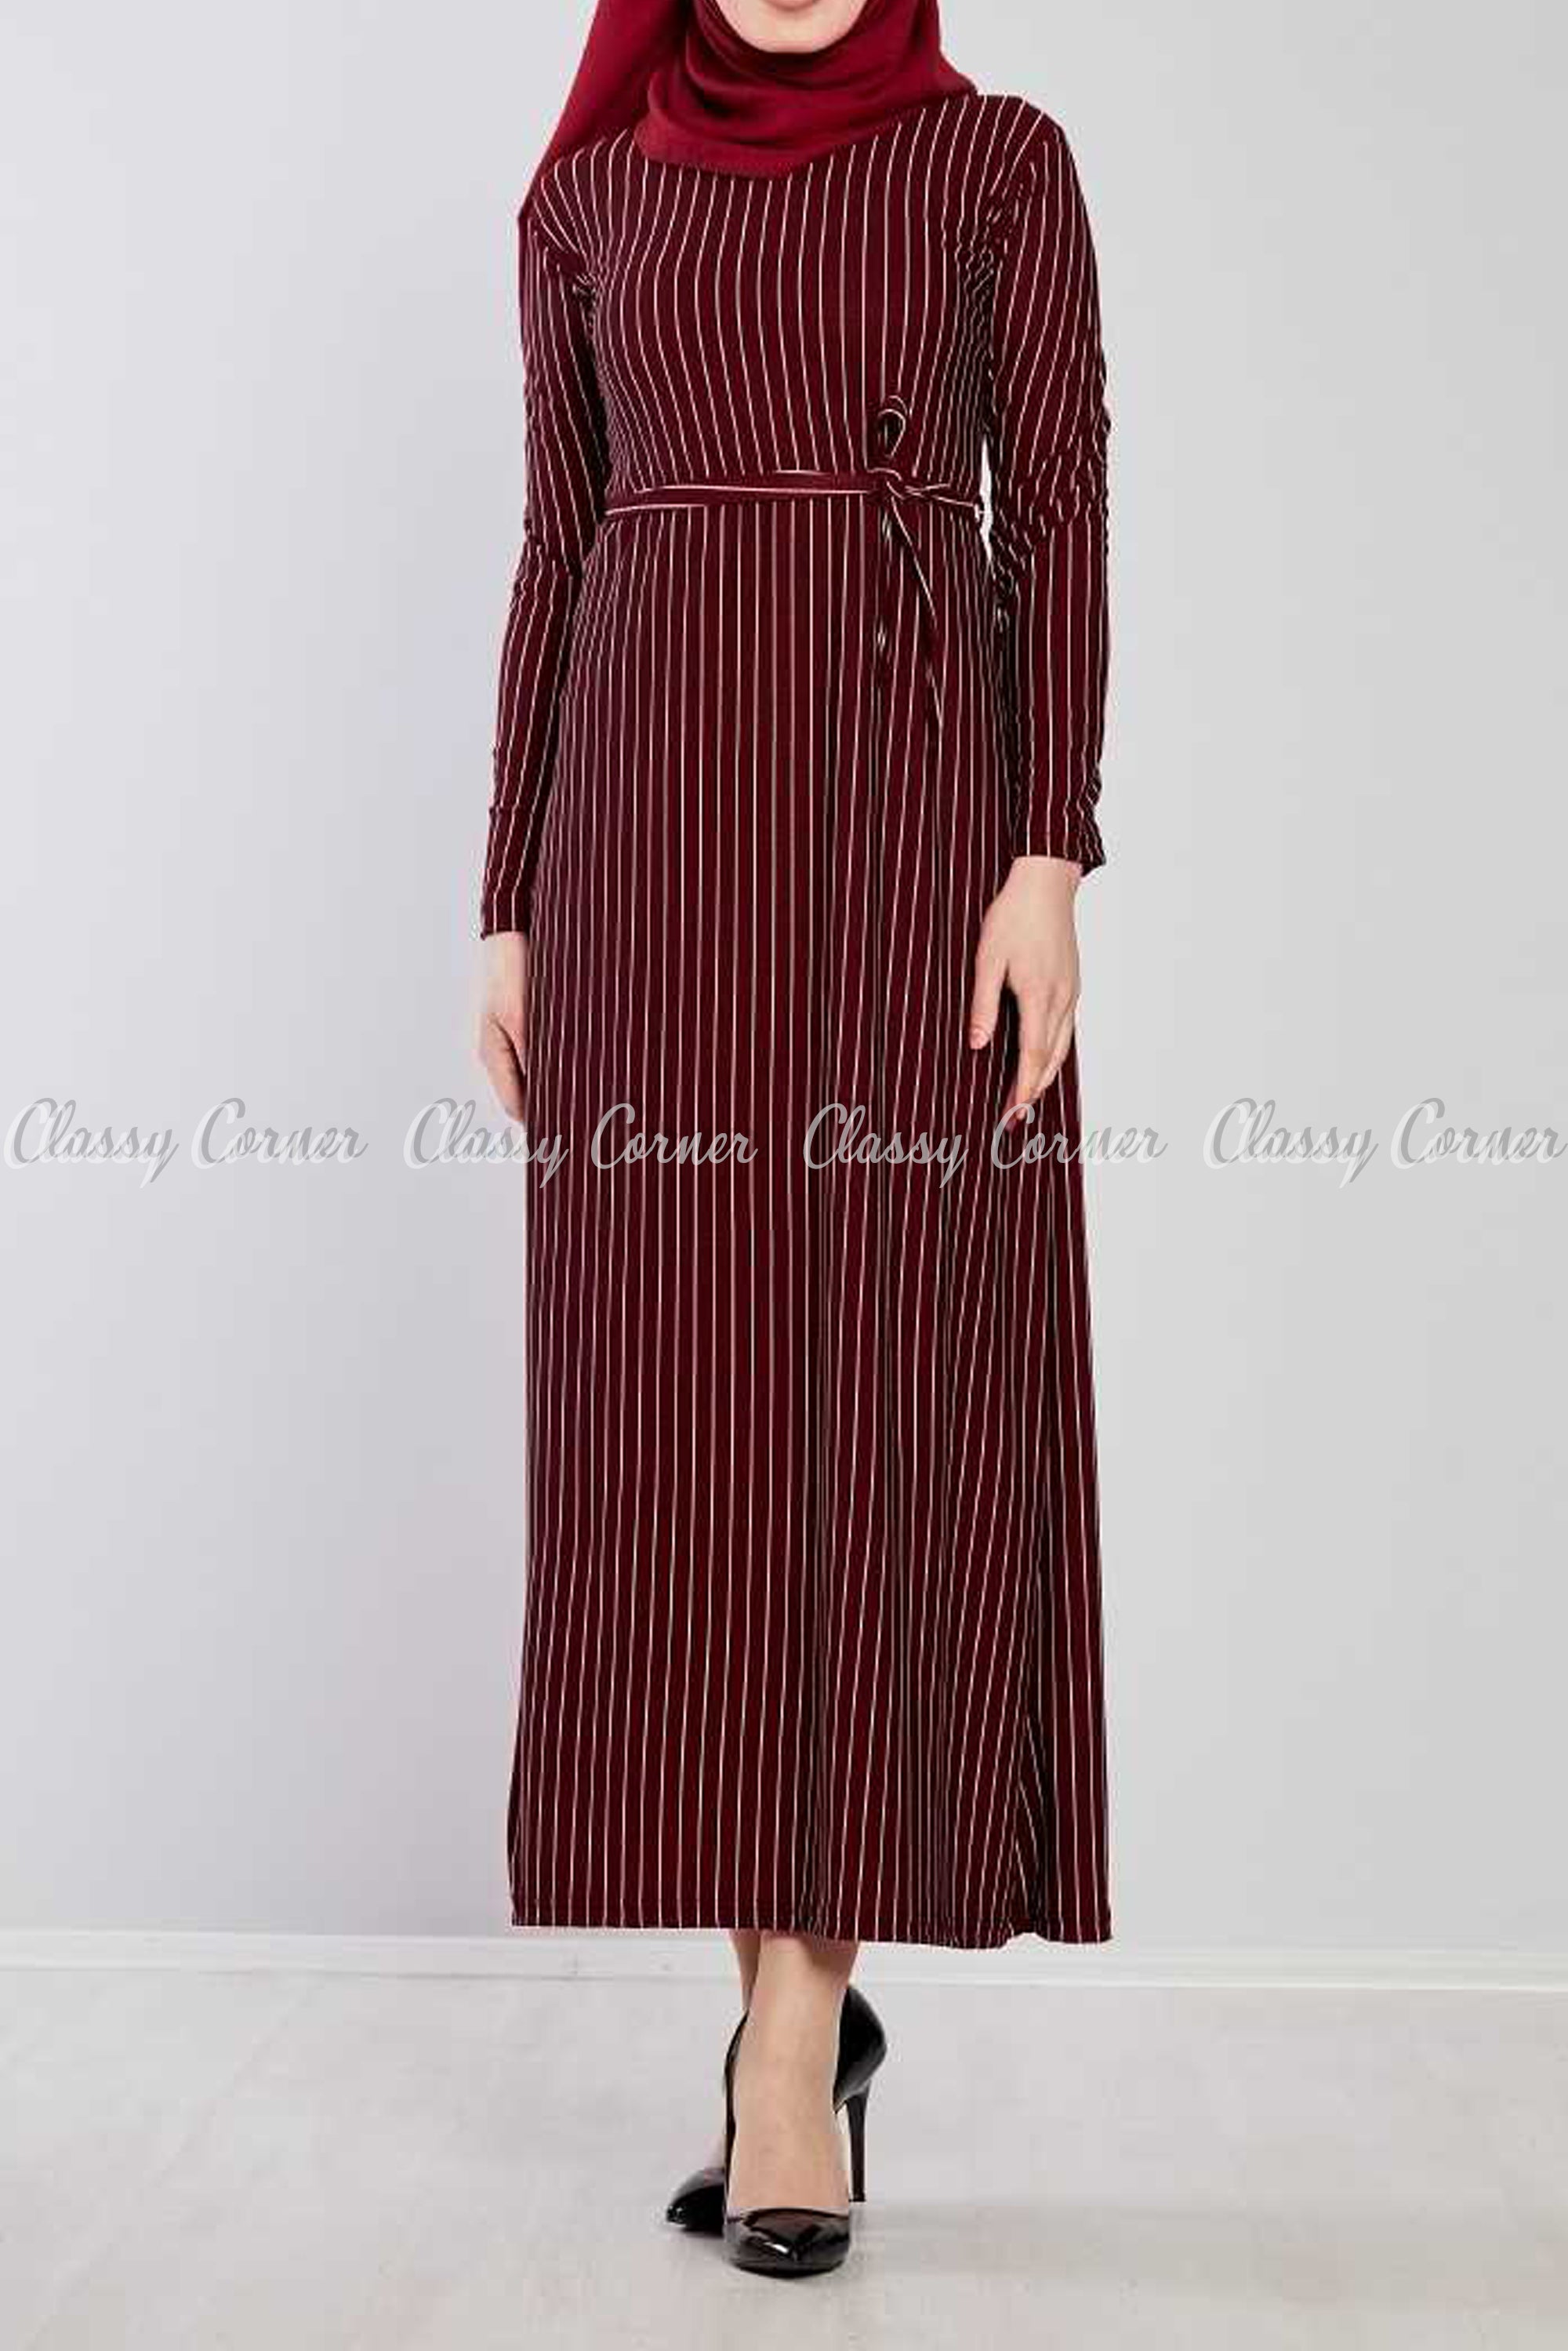 Fine Stripes Prints Red Modest Long Dress - Classy Corner